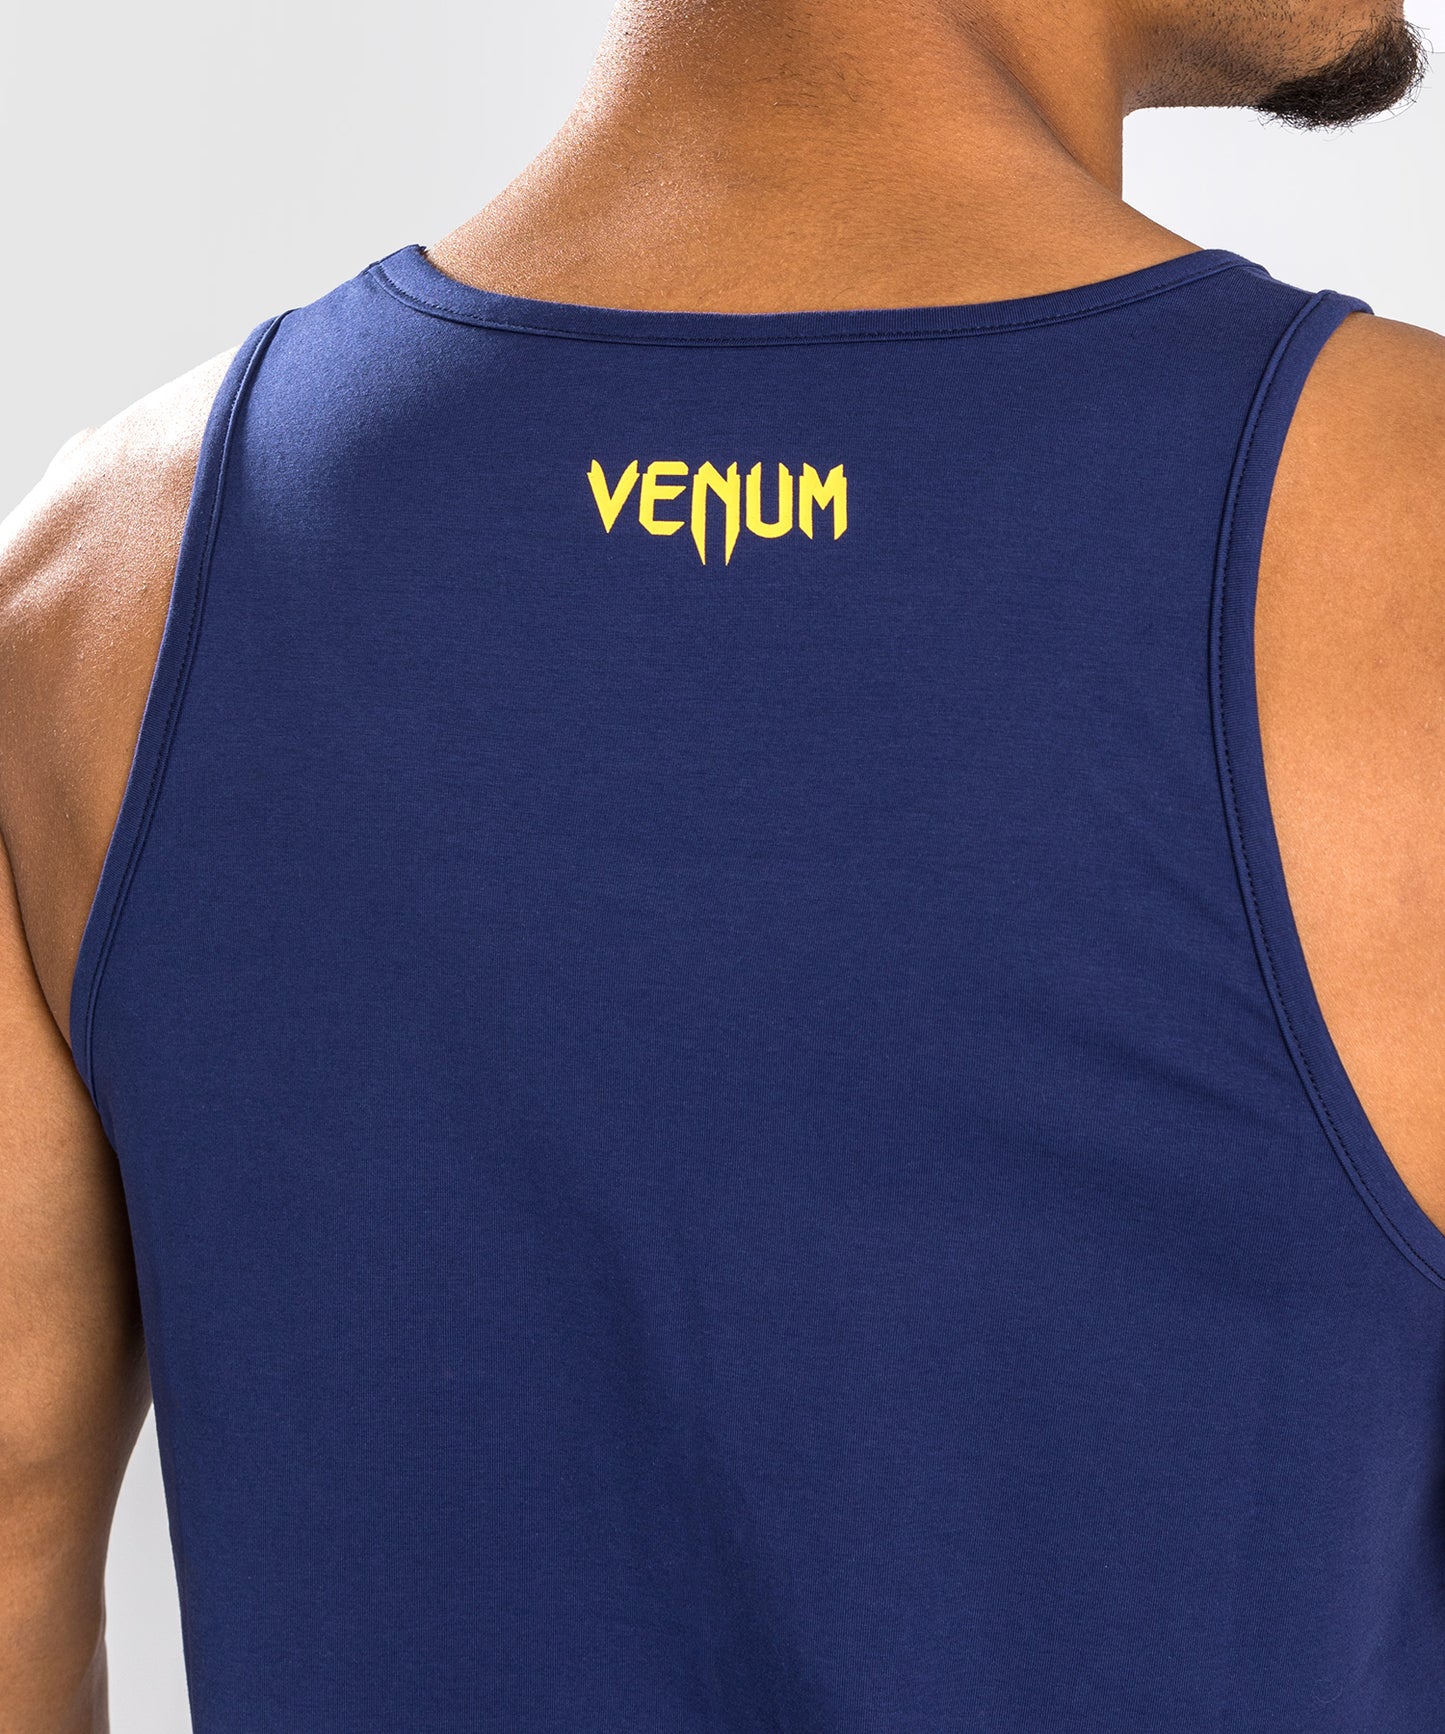 Venum Summer 88 Tank Top - Navy Blue